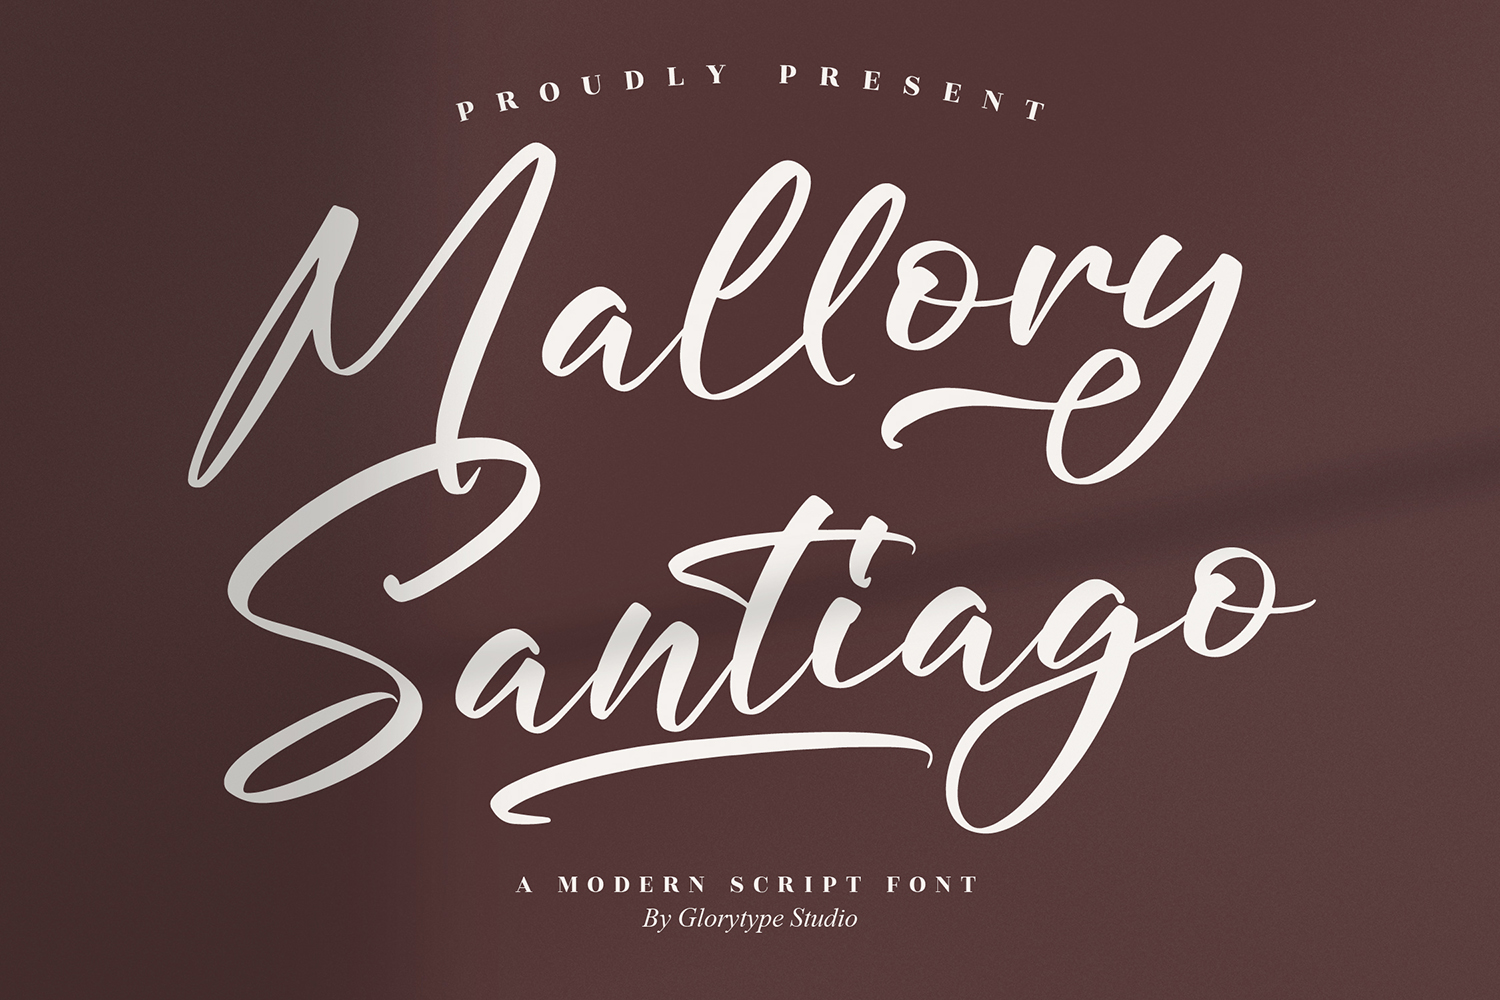 Mallory Santiago Free Font